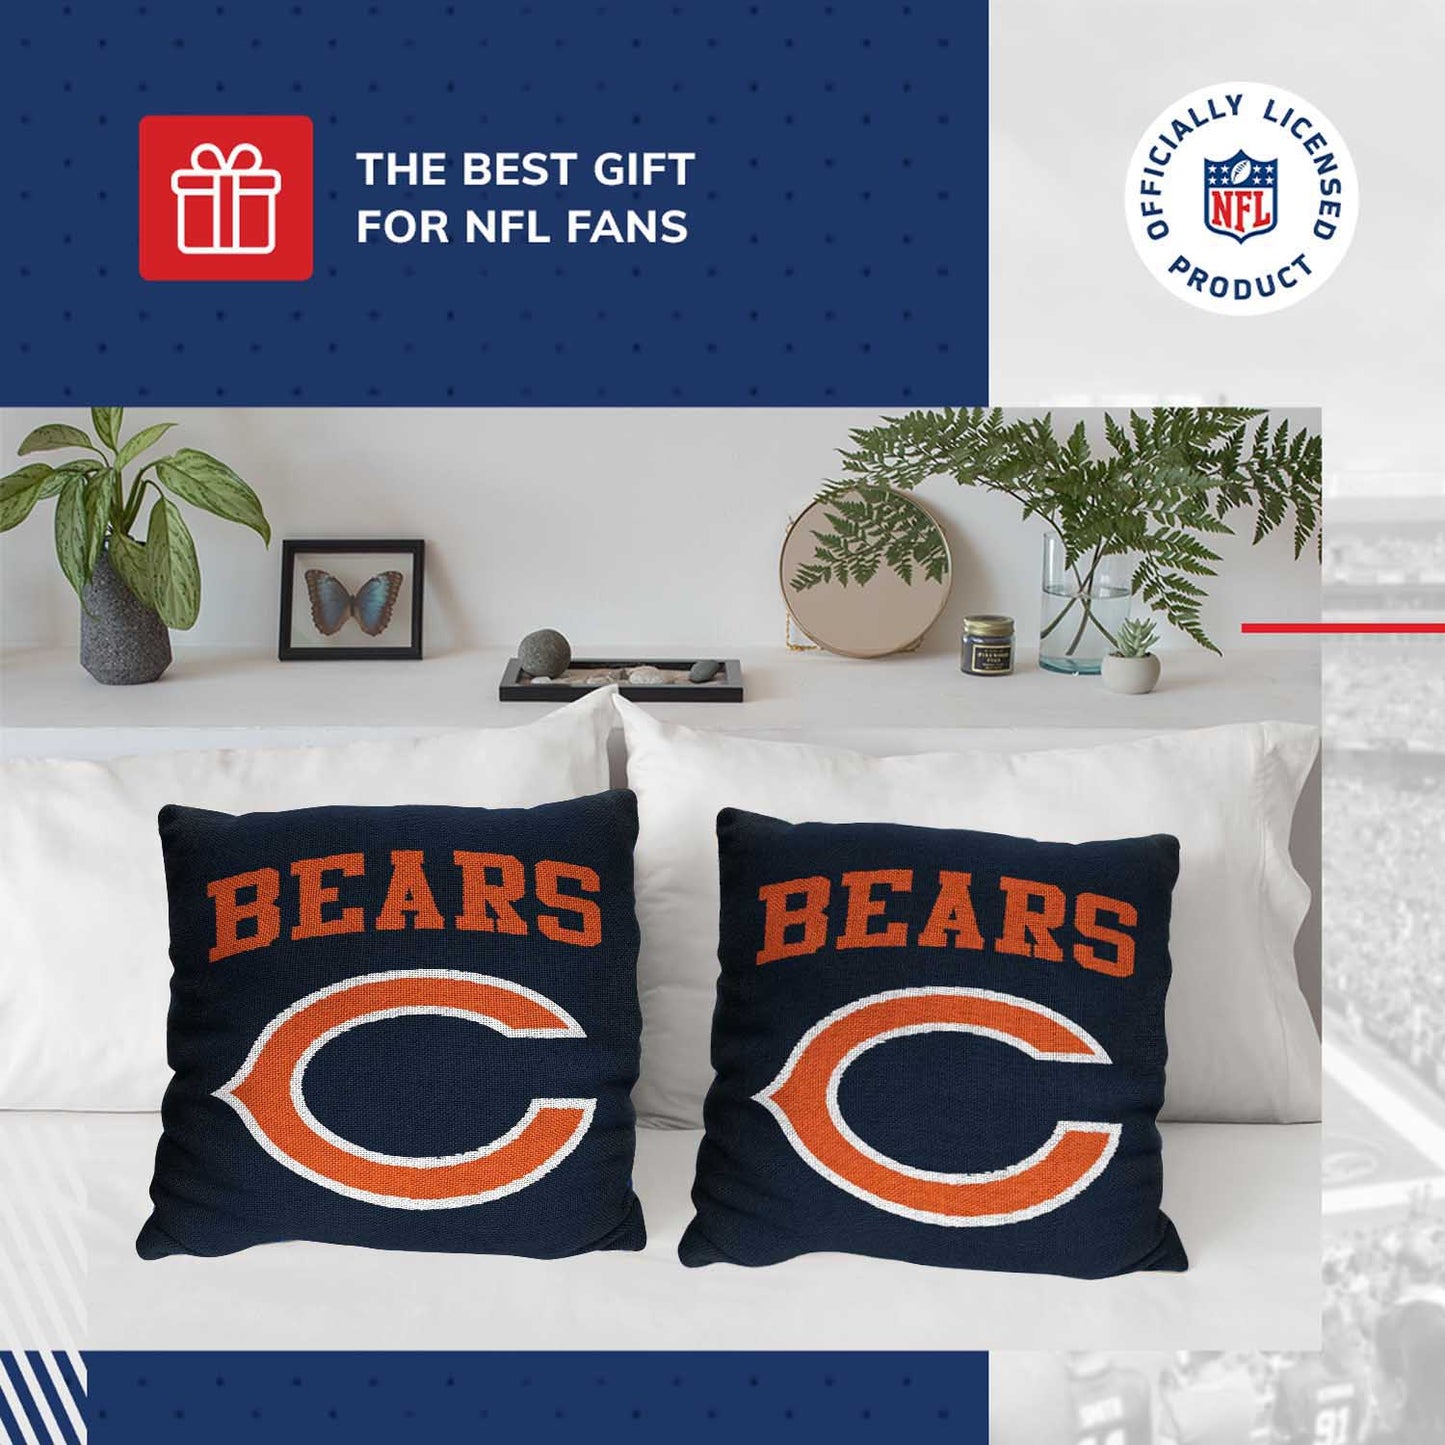 Chicago Bears NFL Decorative Football Throw Pillow - Navy